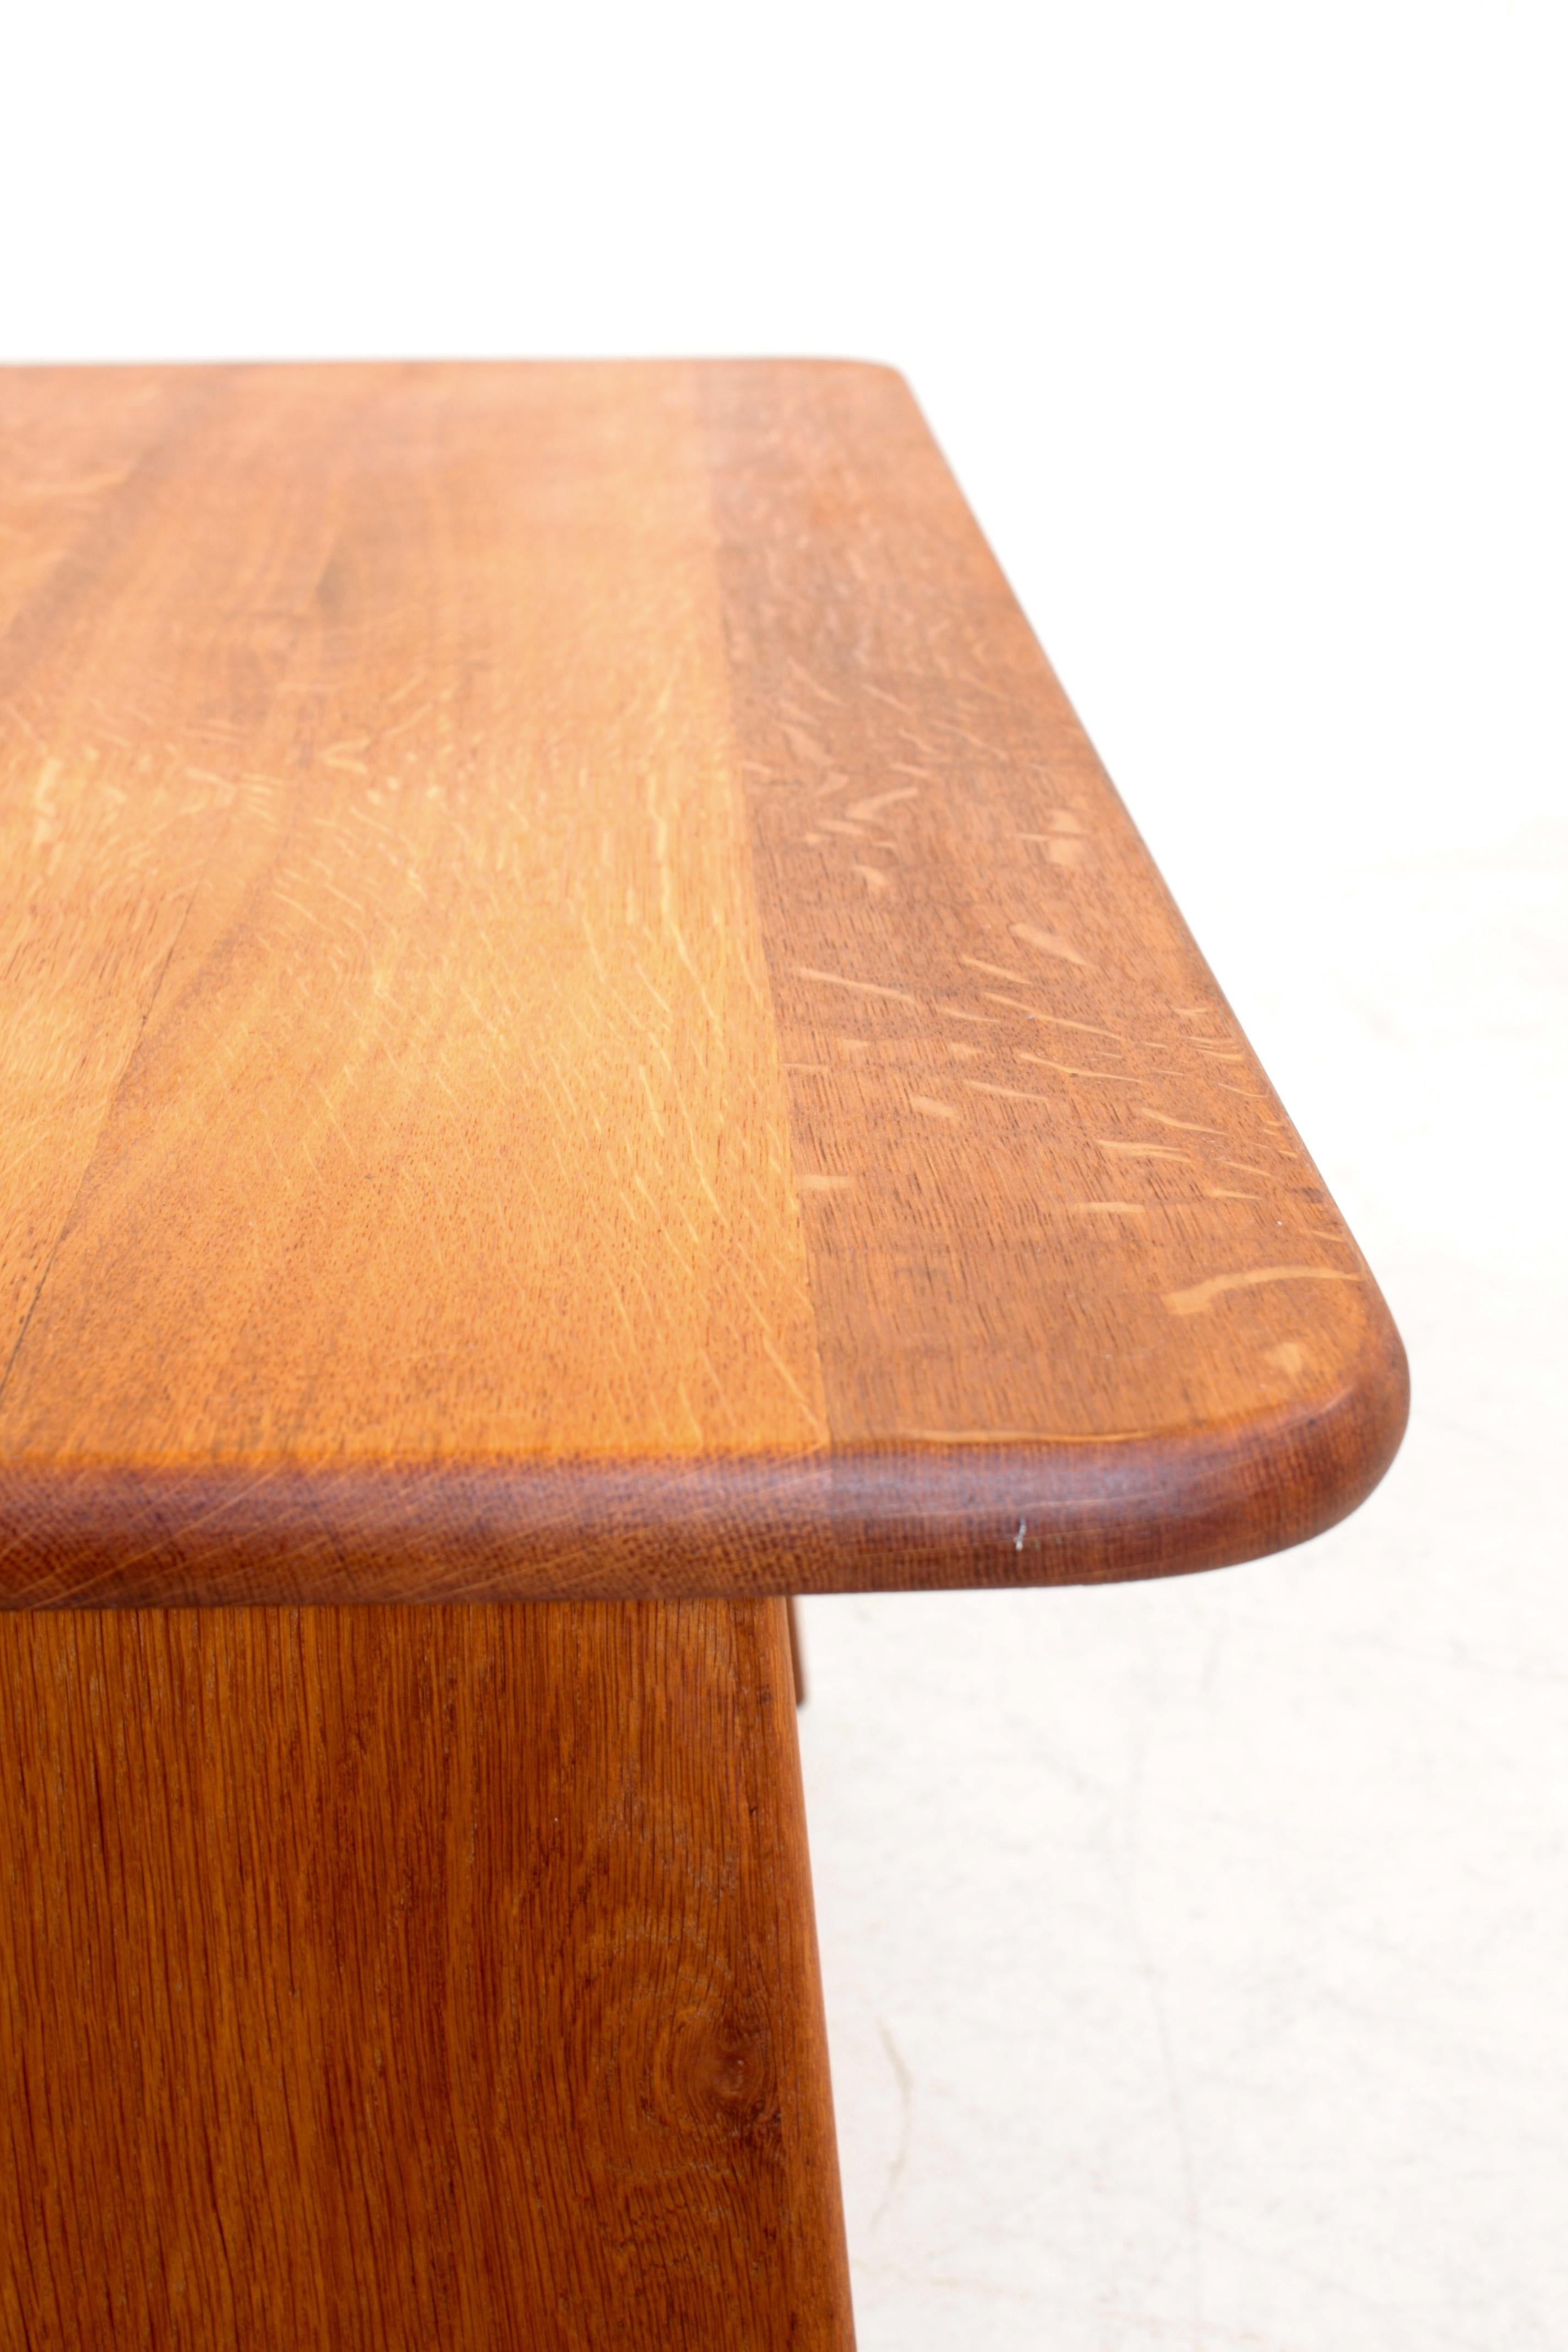 Midcentury Low Table in Solid Oak, Danish Cabinetmaker, 1950s For Sale 2